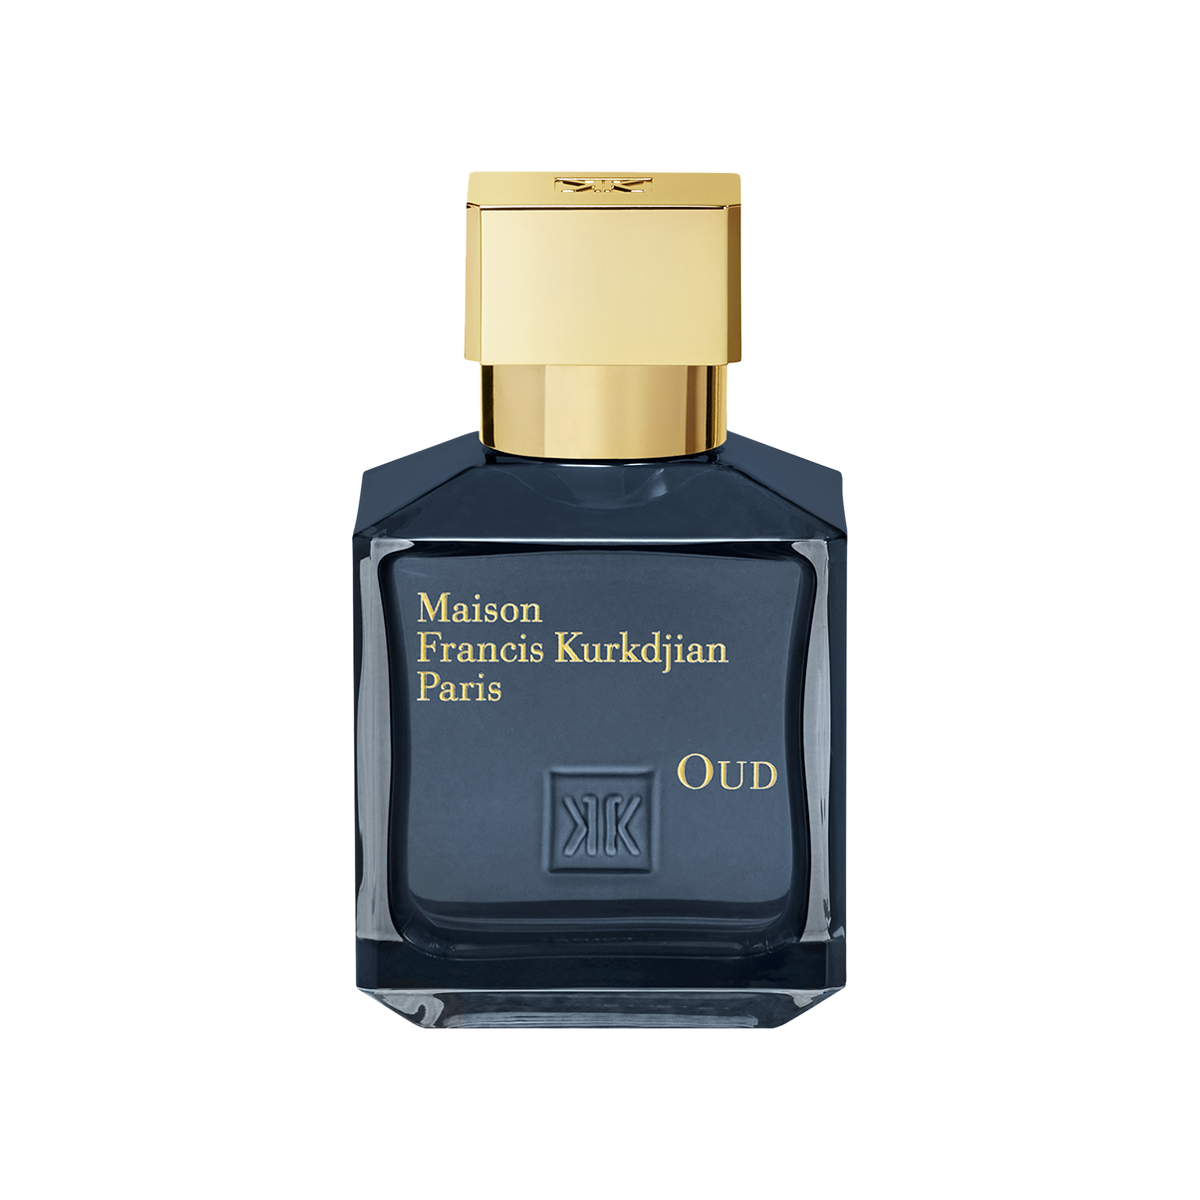 Maison Francis Kurkdjian - Oud Eau de Parfum